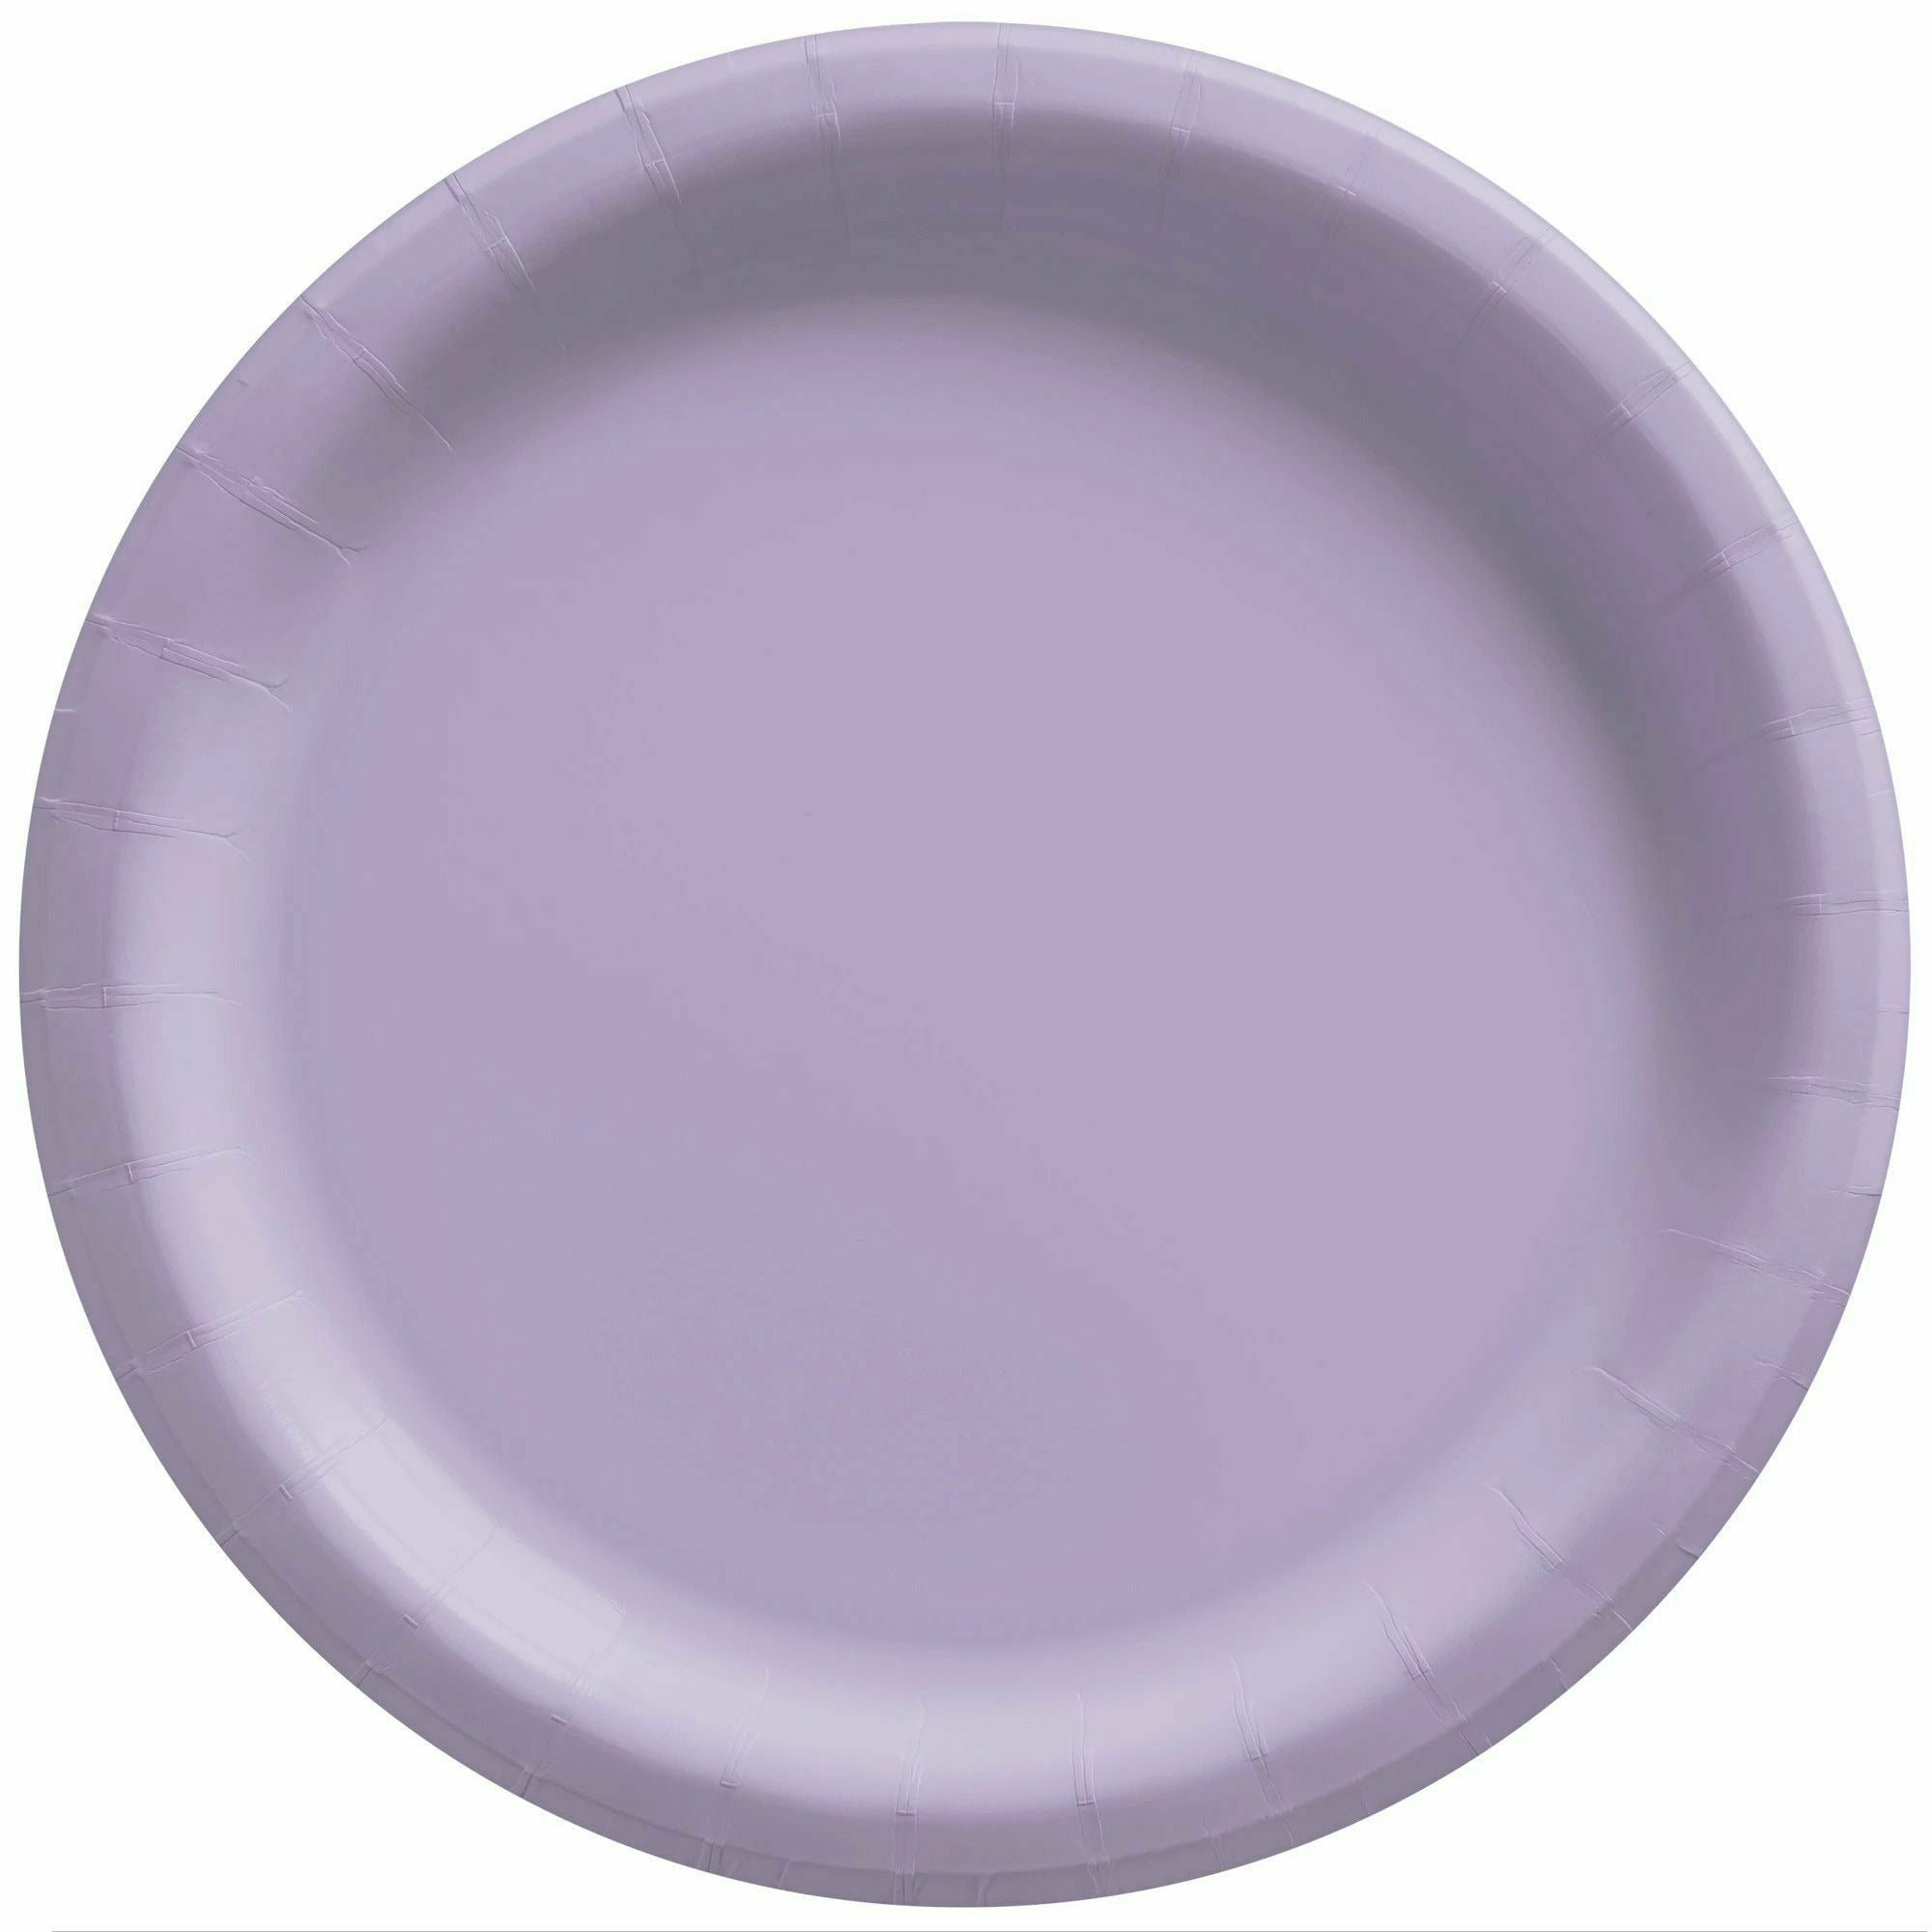 Amscan BASIC Lavender - 6 3/4" Round Paper Plates, 20 Ct.